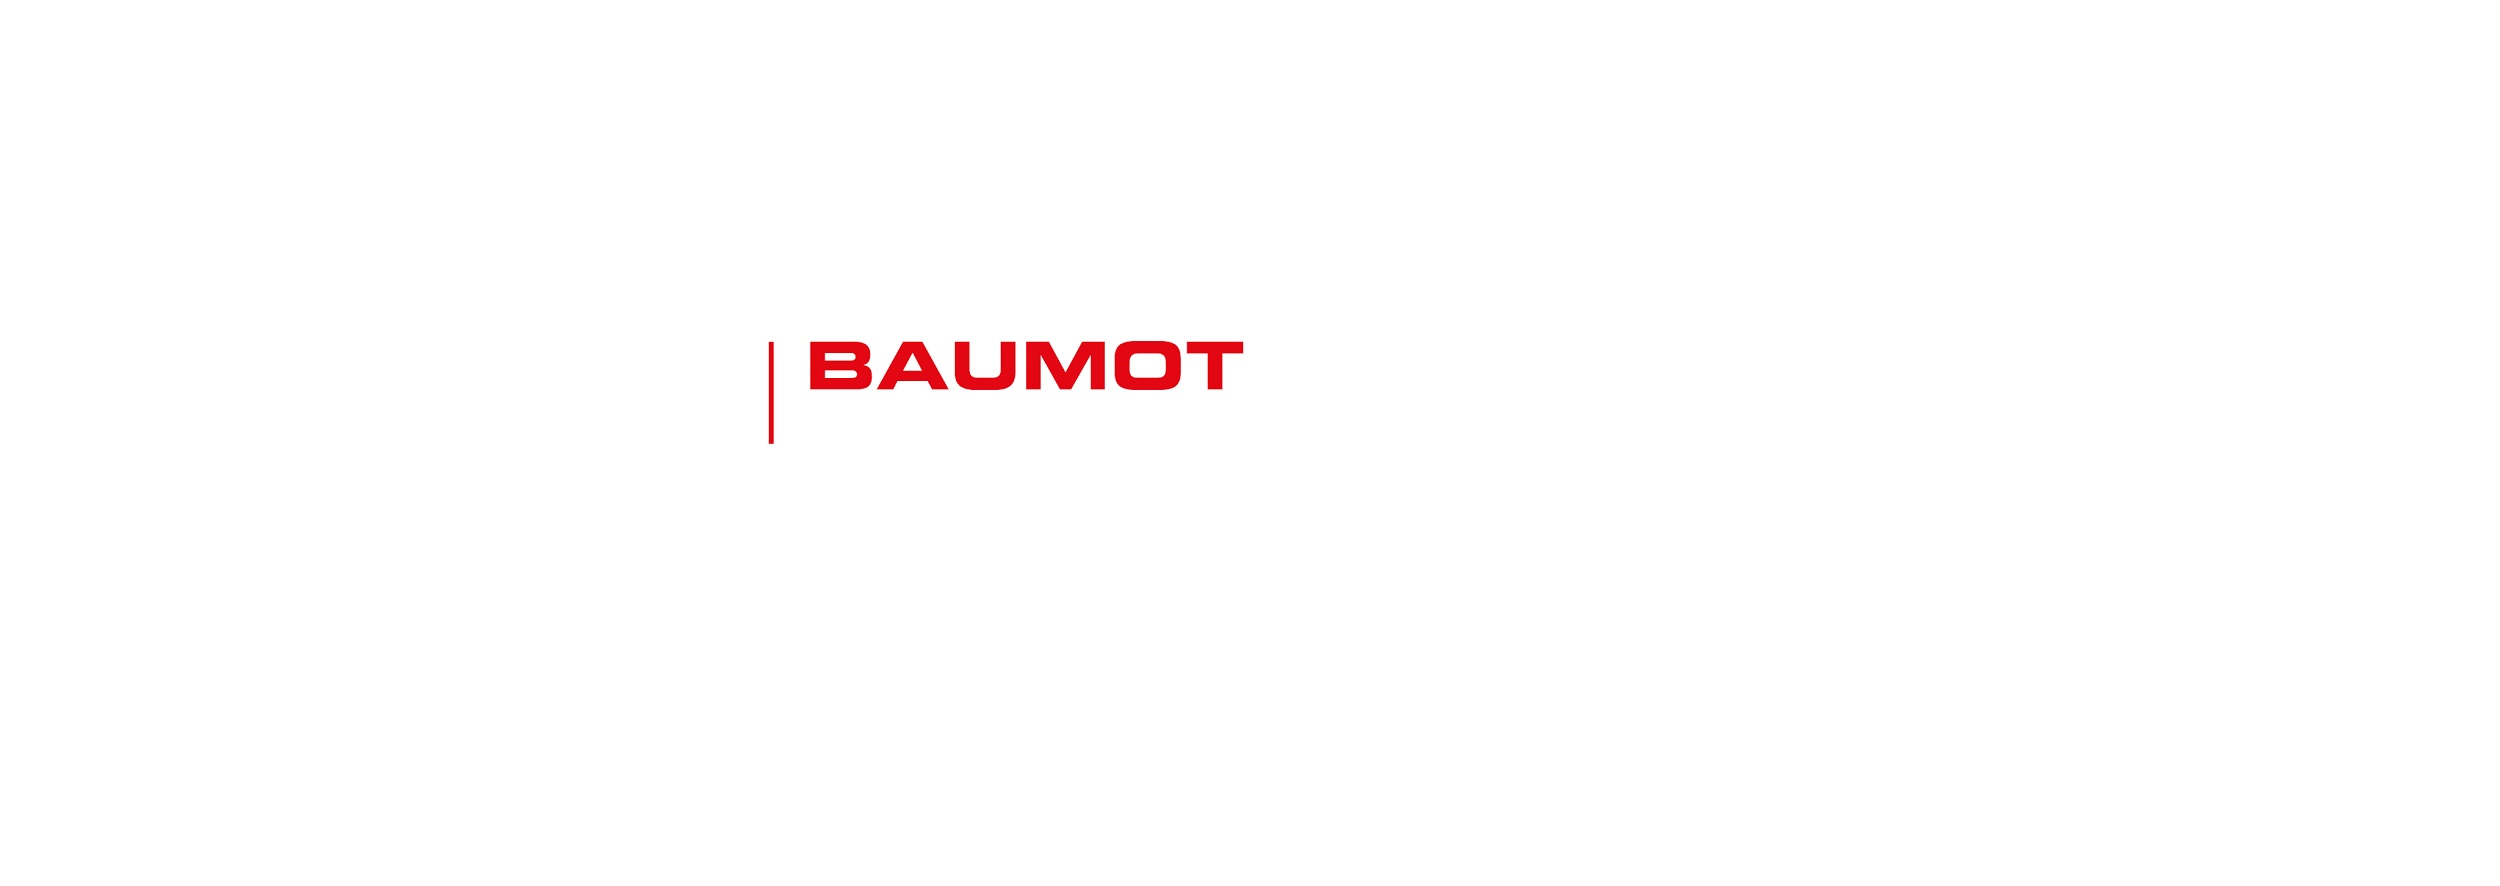 Baumot UK in administration